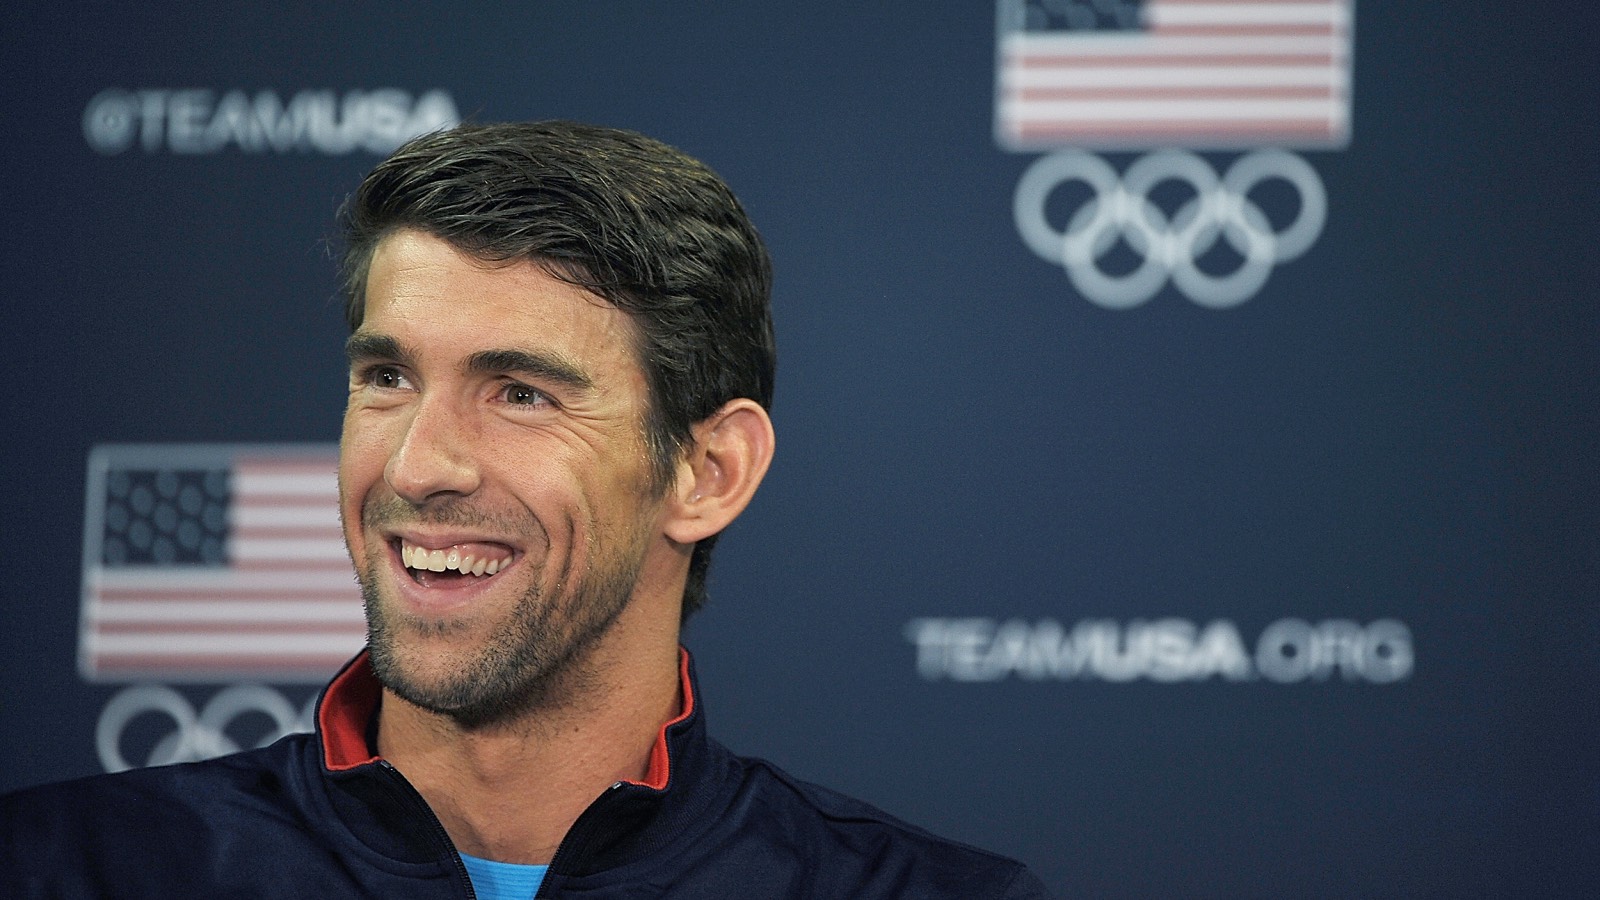 2016 Team Michael Phelps USA Media Summit - Press Conferences